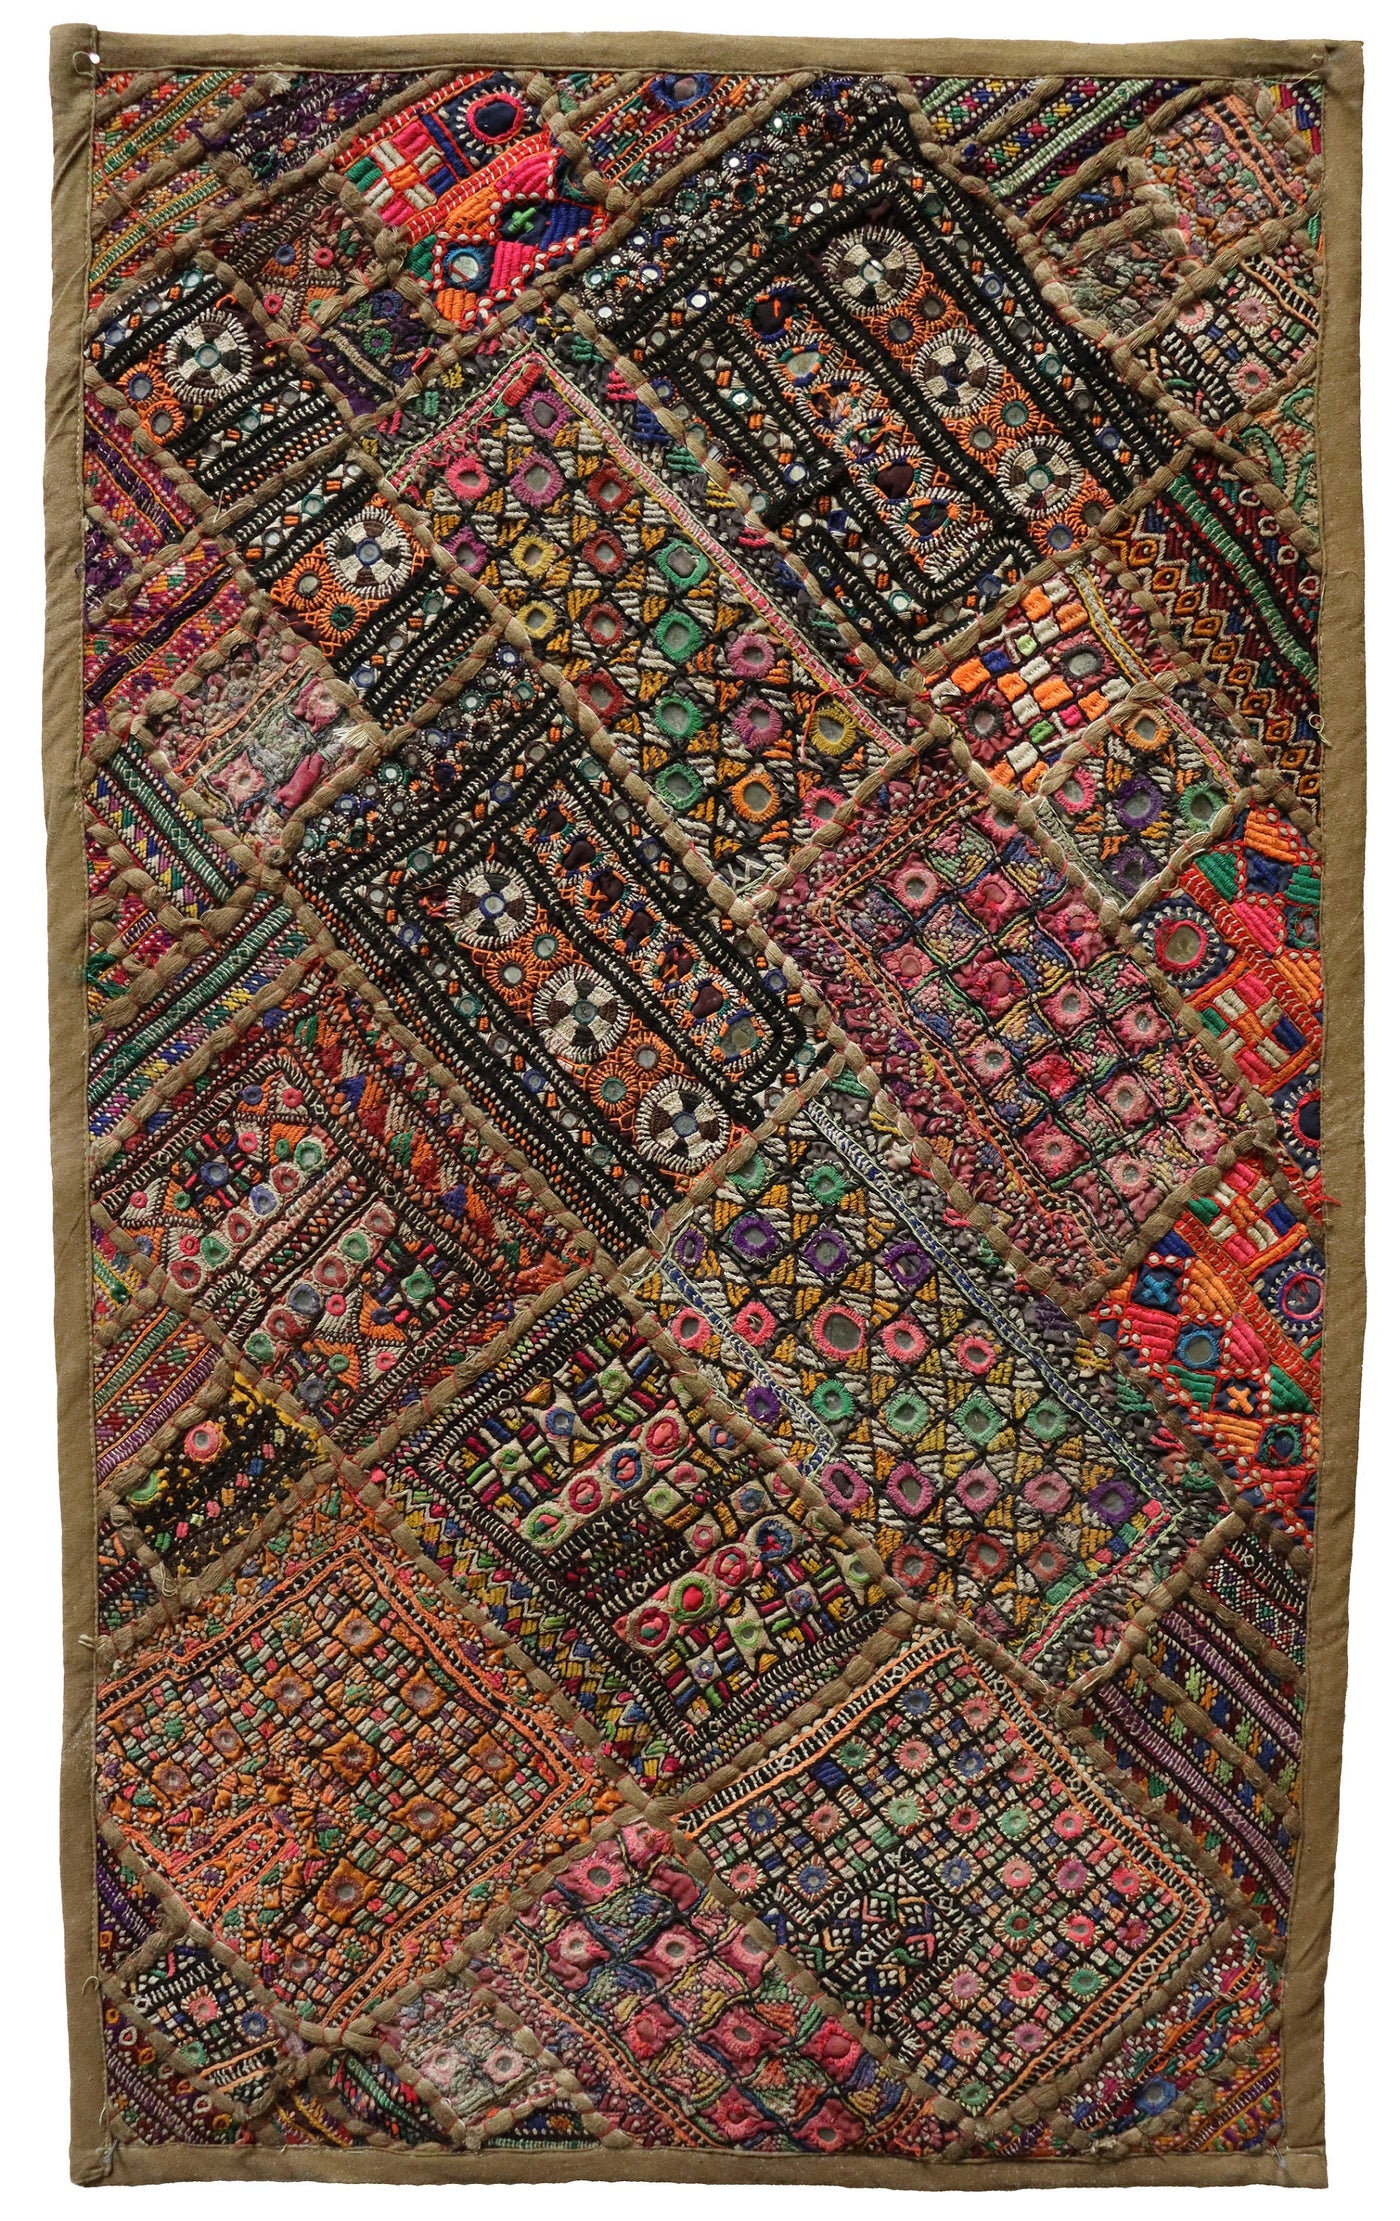 87x53 cm Vintage Bohemian handgefertigte orientalische Patchwork Wandbehang Wandteppich Teppich  Nr:28/41 Wandbehang Orientsbazar   